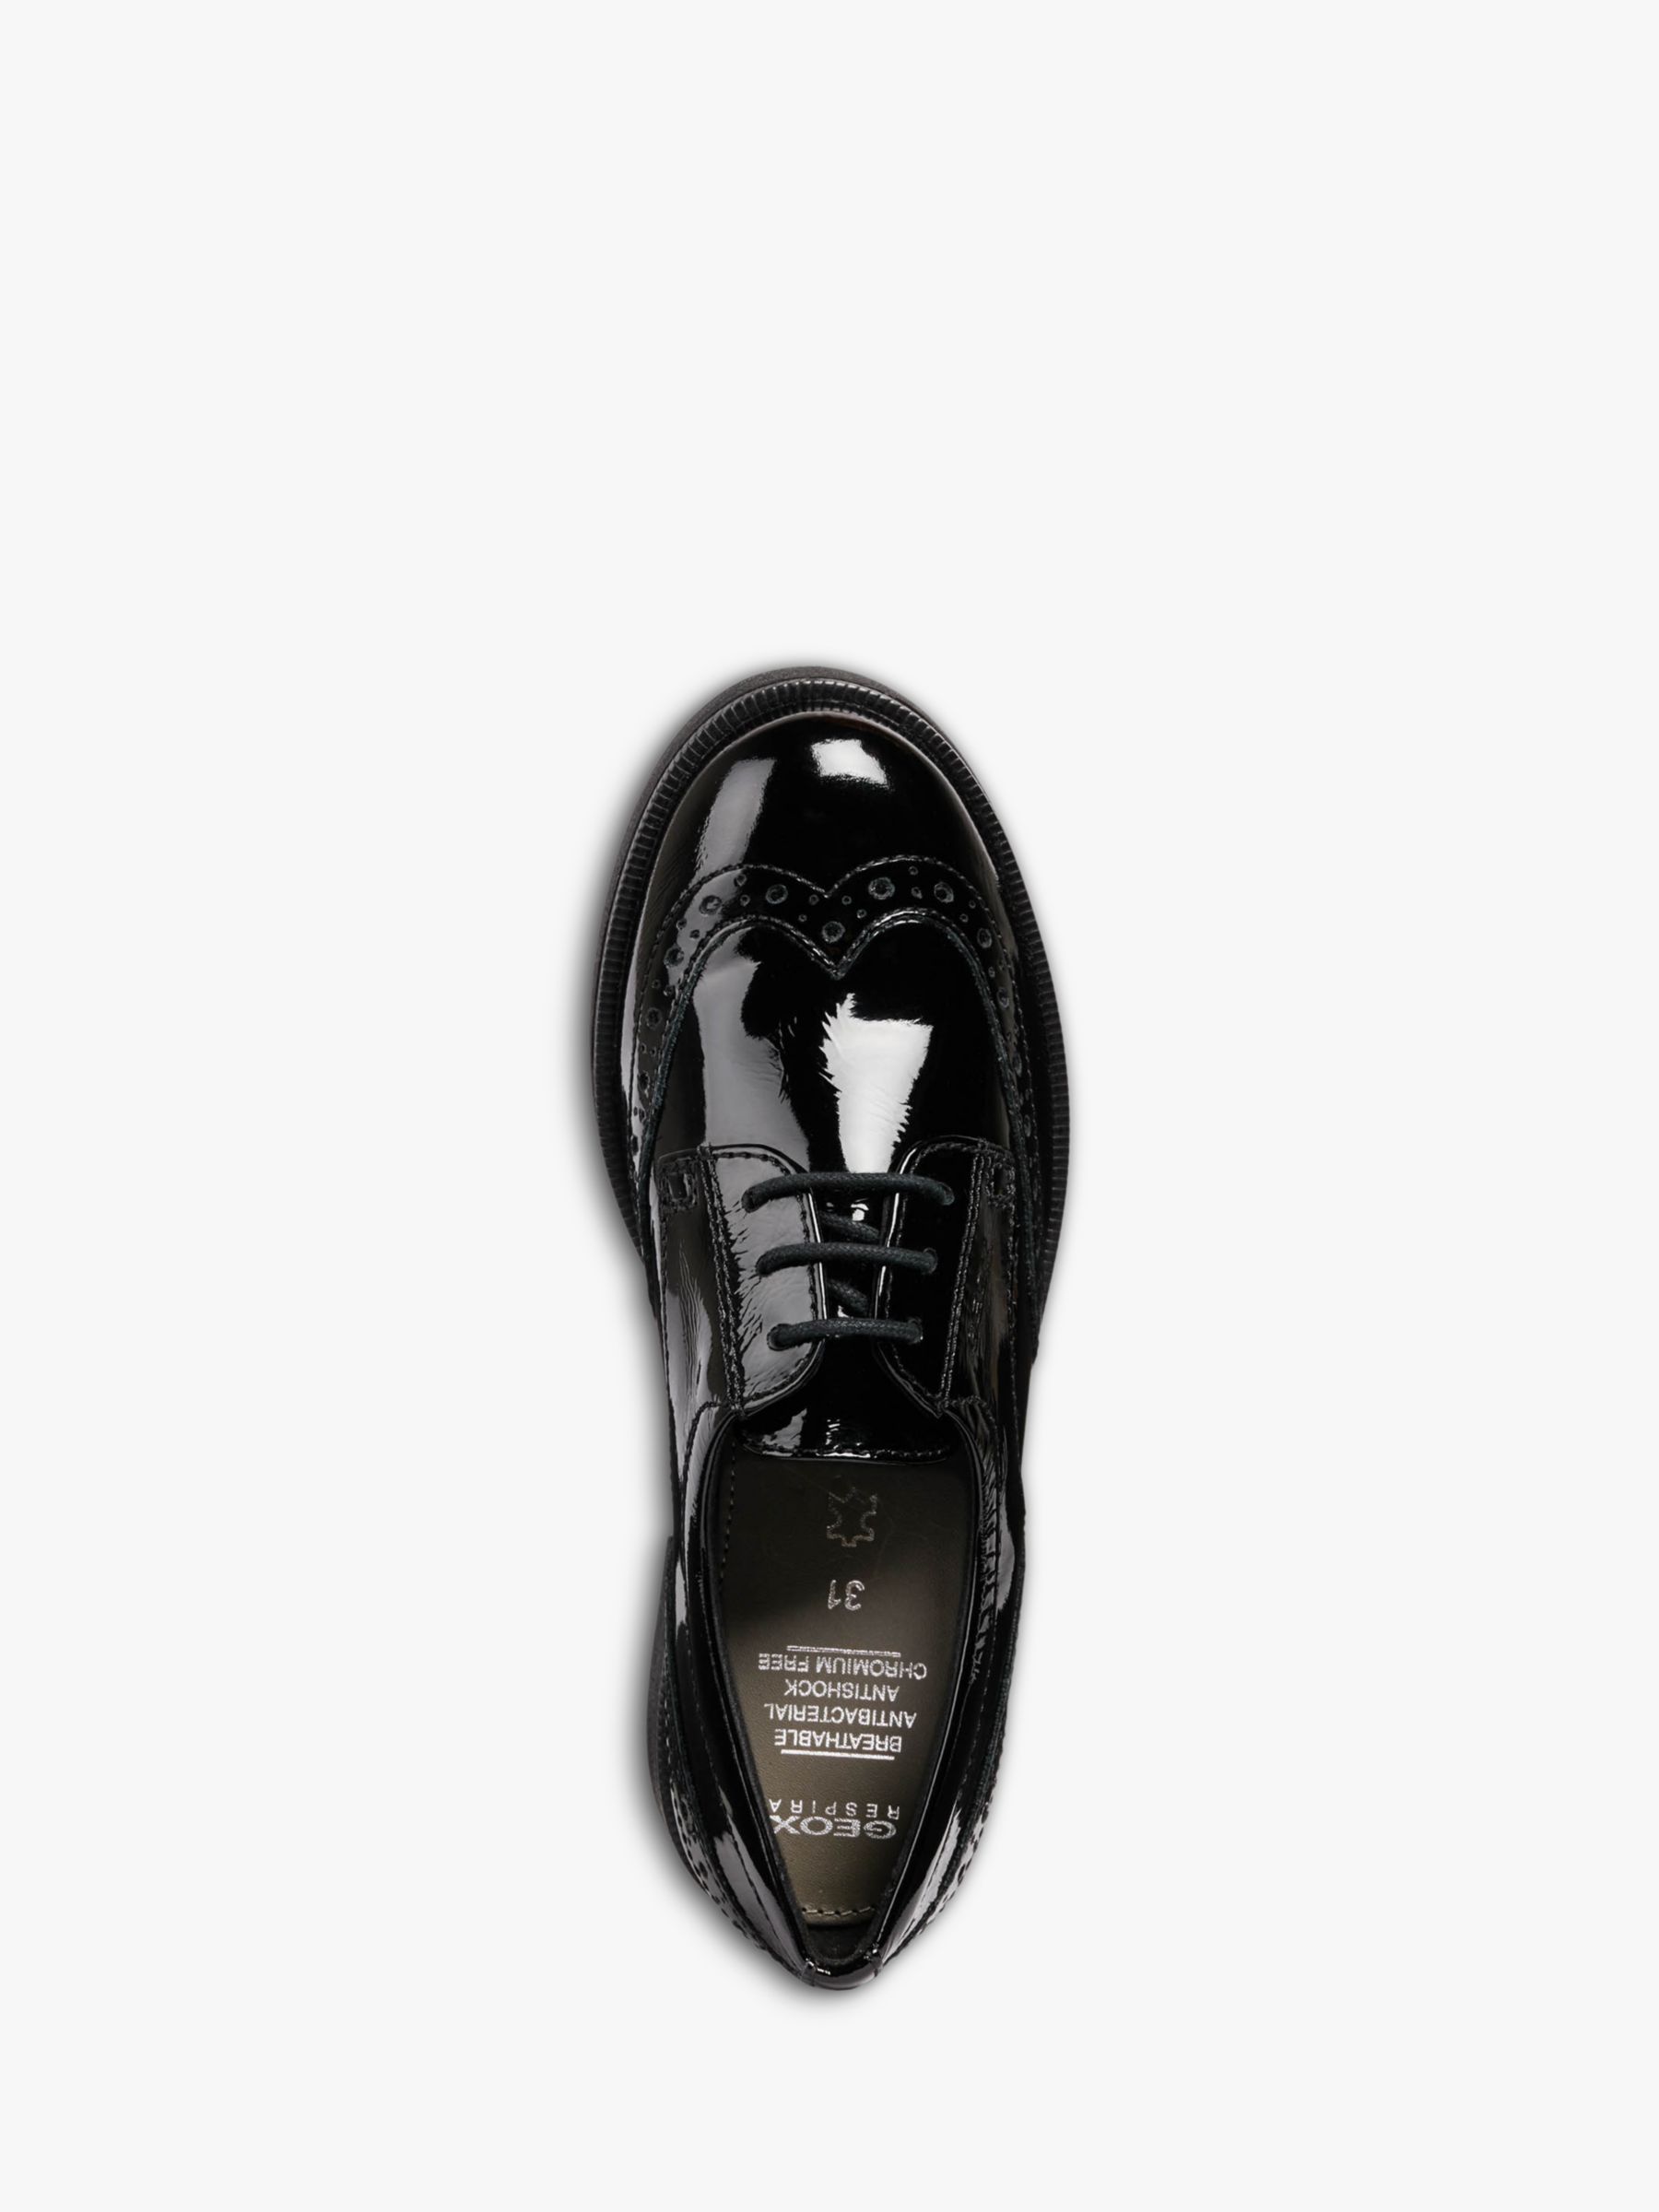 Geox Kids' Agata Lace-Up Brogue School Shoes, Black, 41